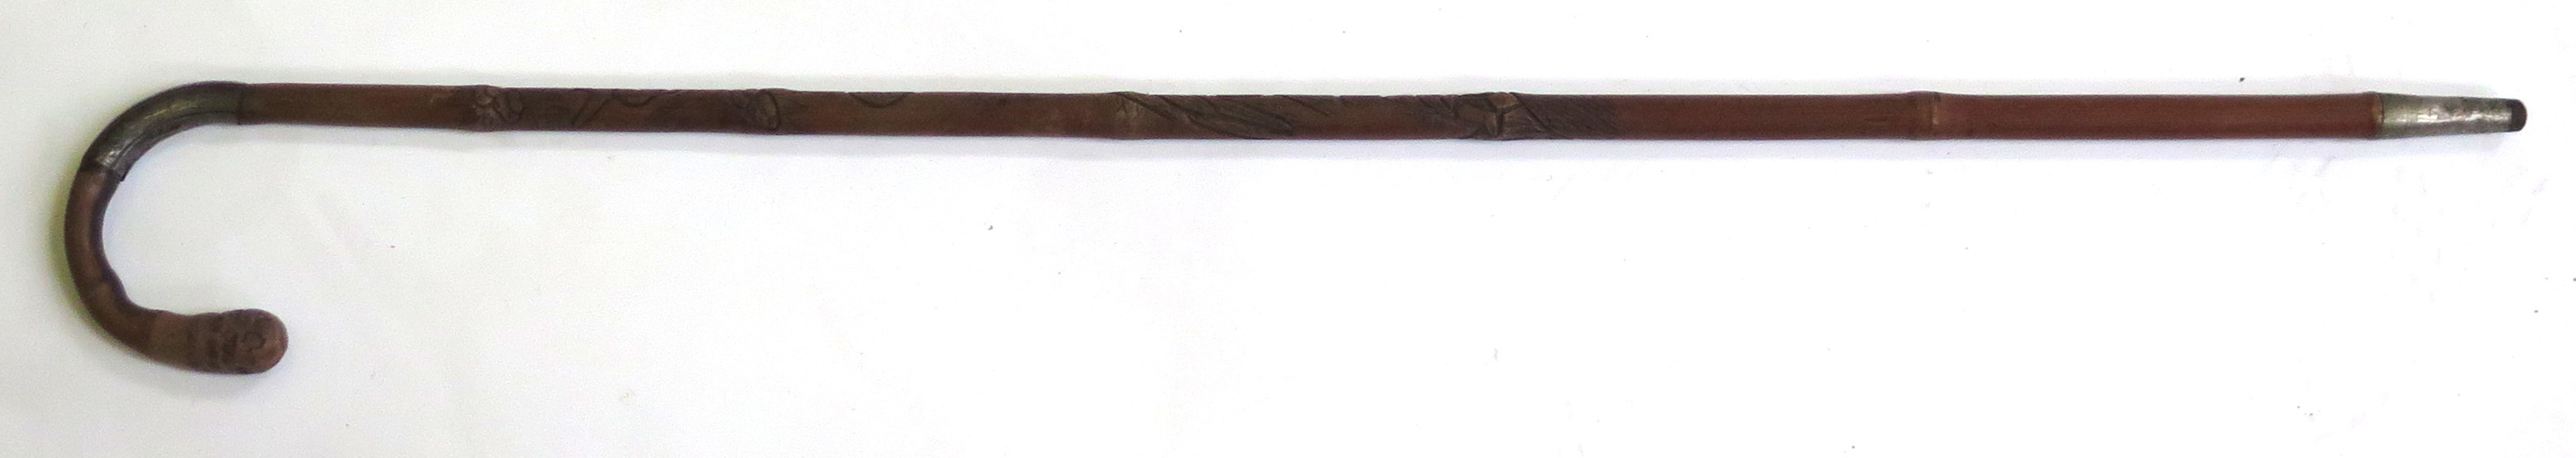 Käpp, bambu med silver(?)montage, antagligen Kina, sekelskiftet 1900,_15605a_lg.jpeg